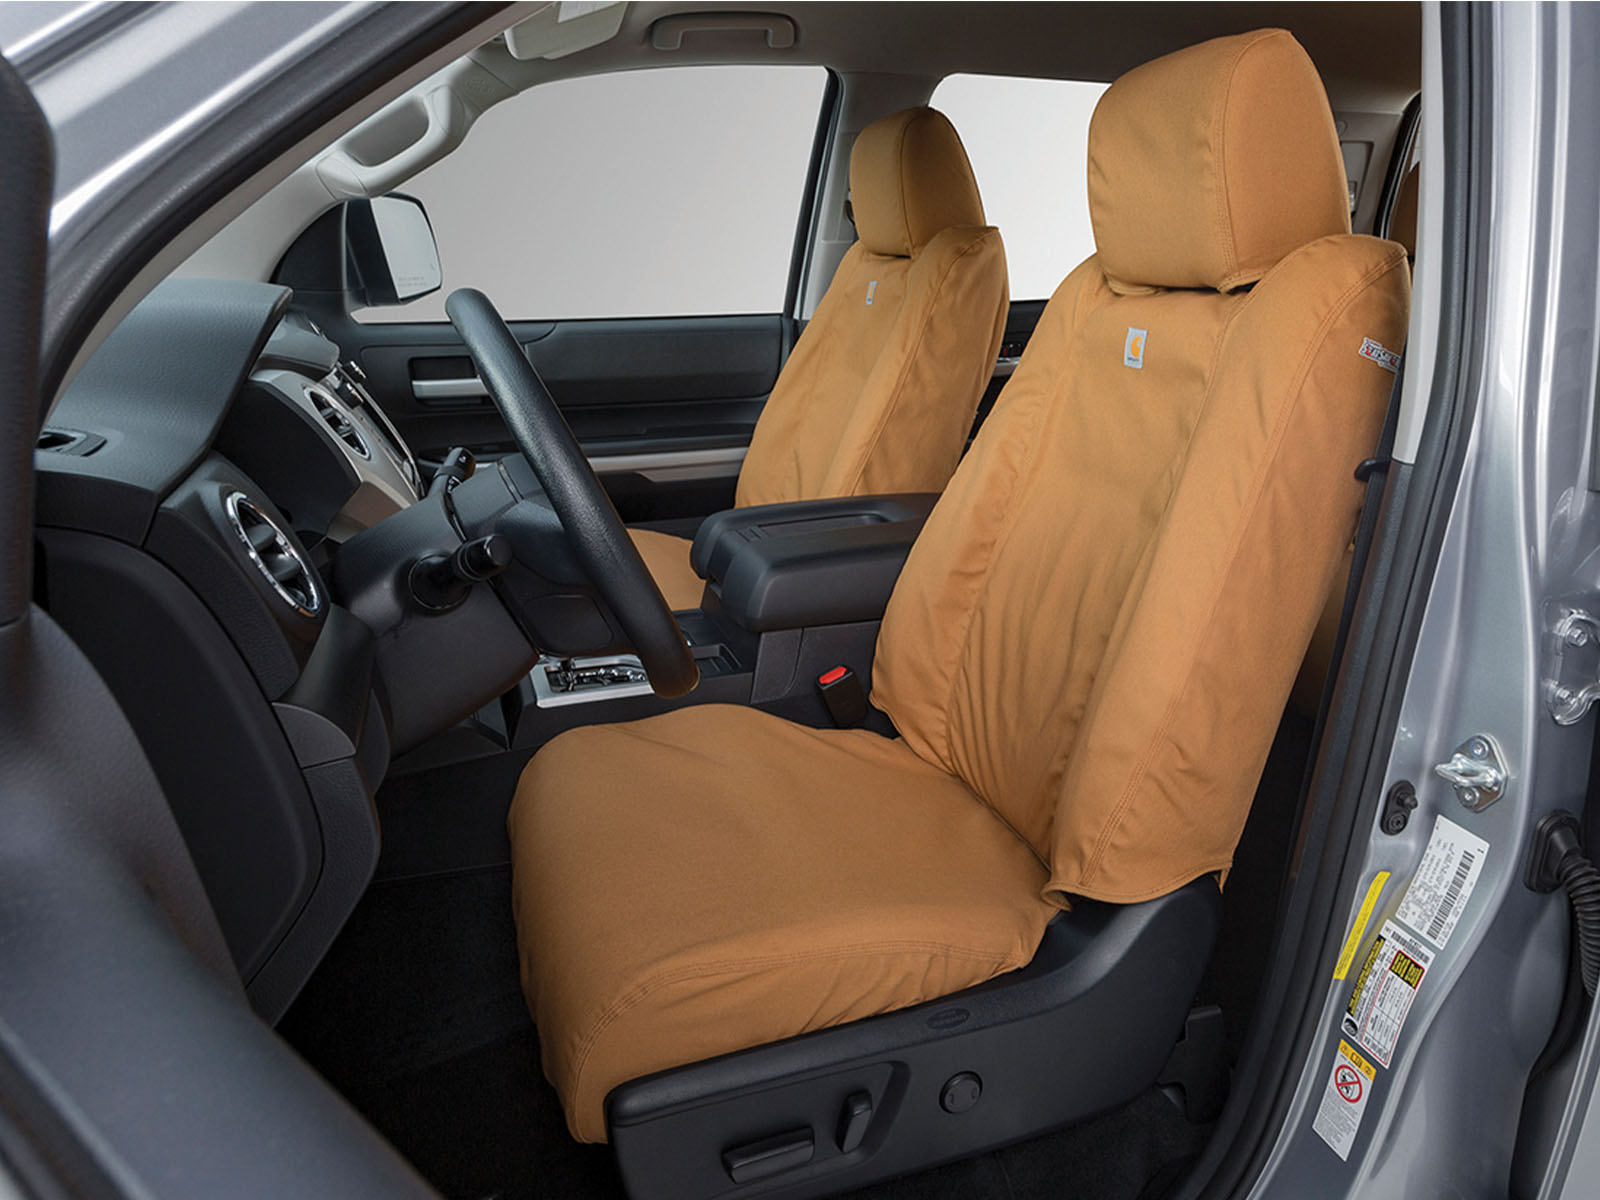 2018 Subaru Forester Seat Covers Realtruck - Subaru Forester 2018 Waterproof Seat Covers